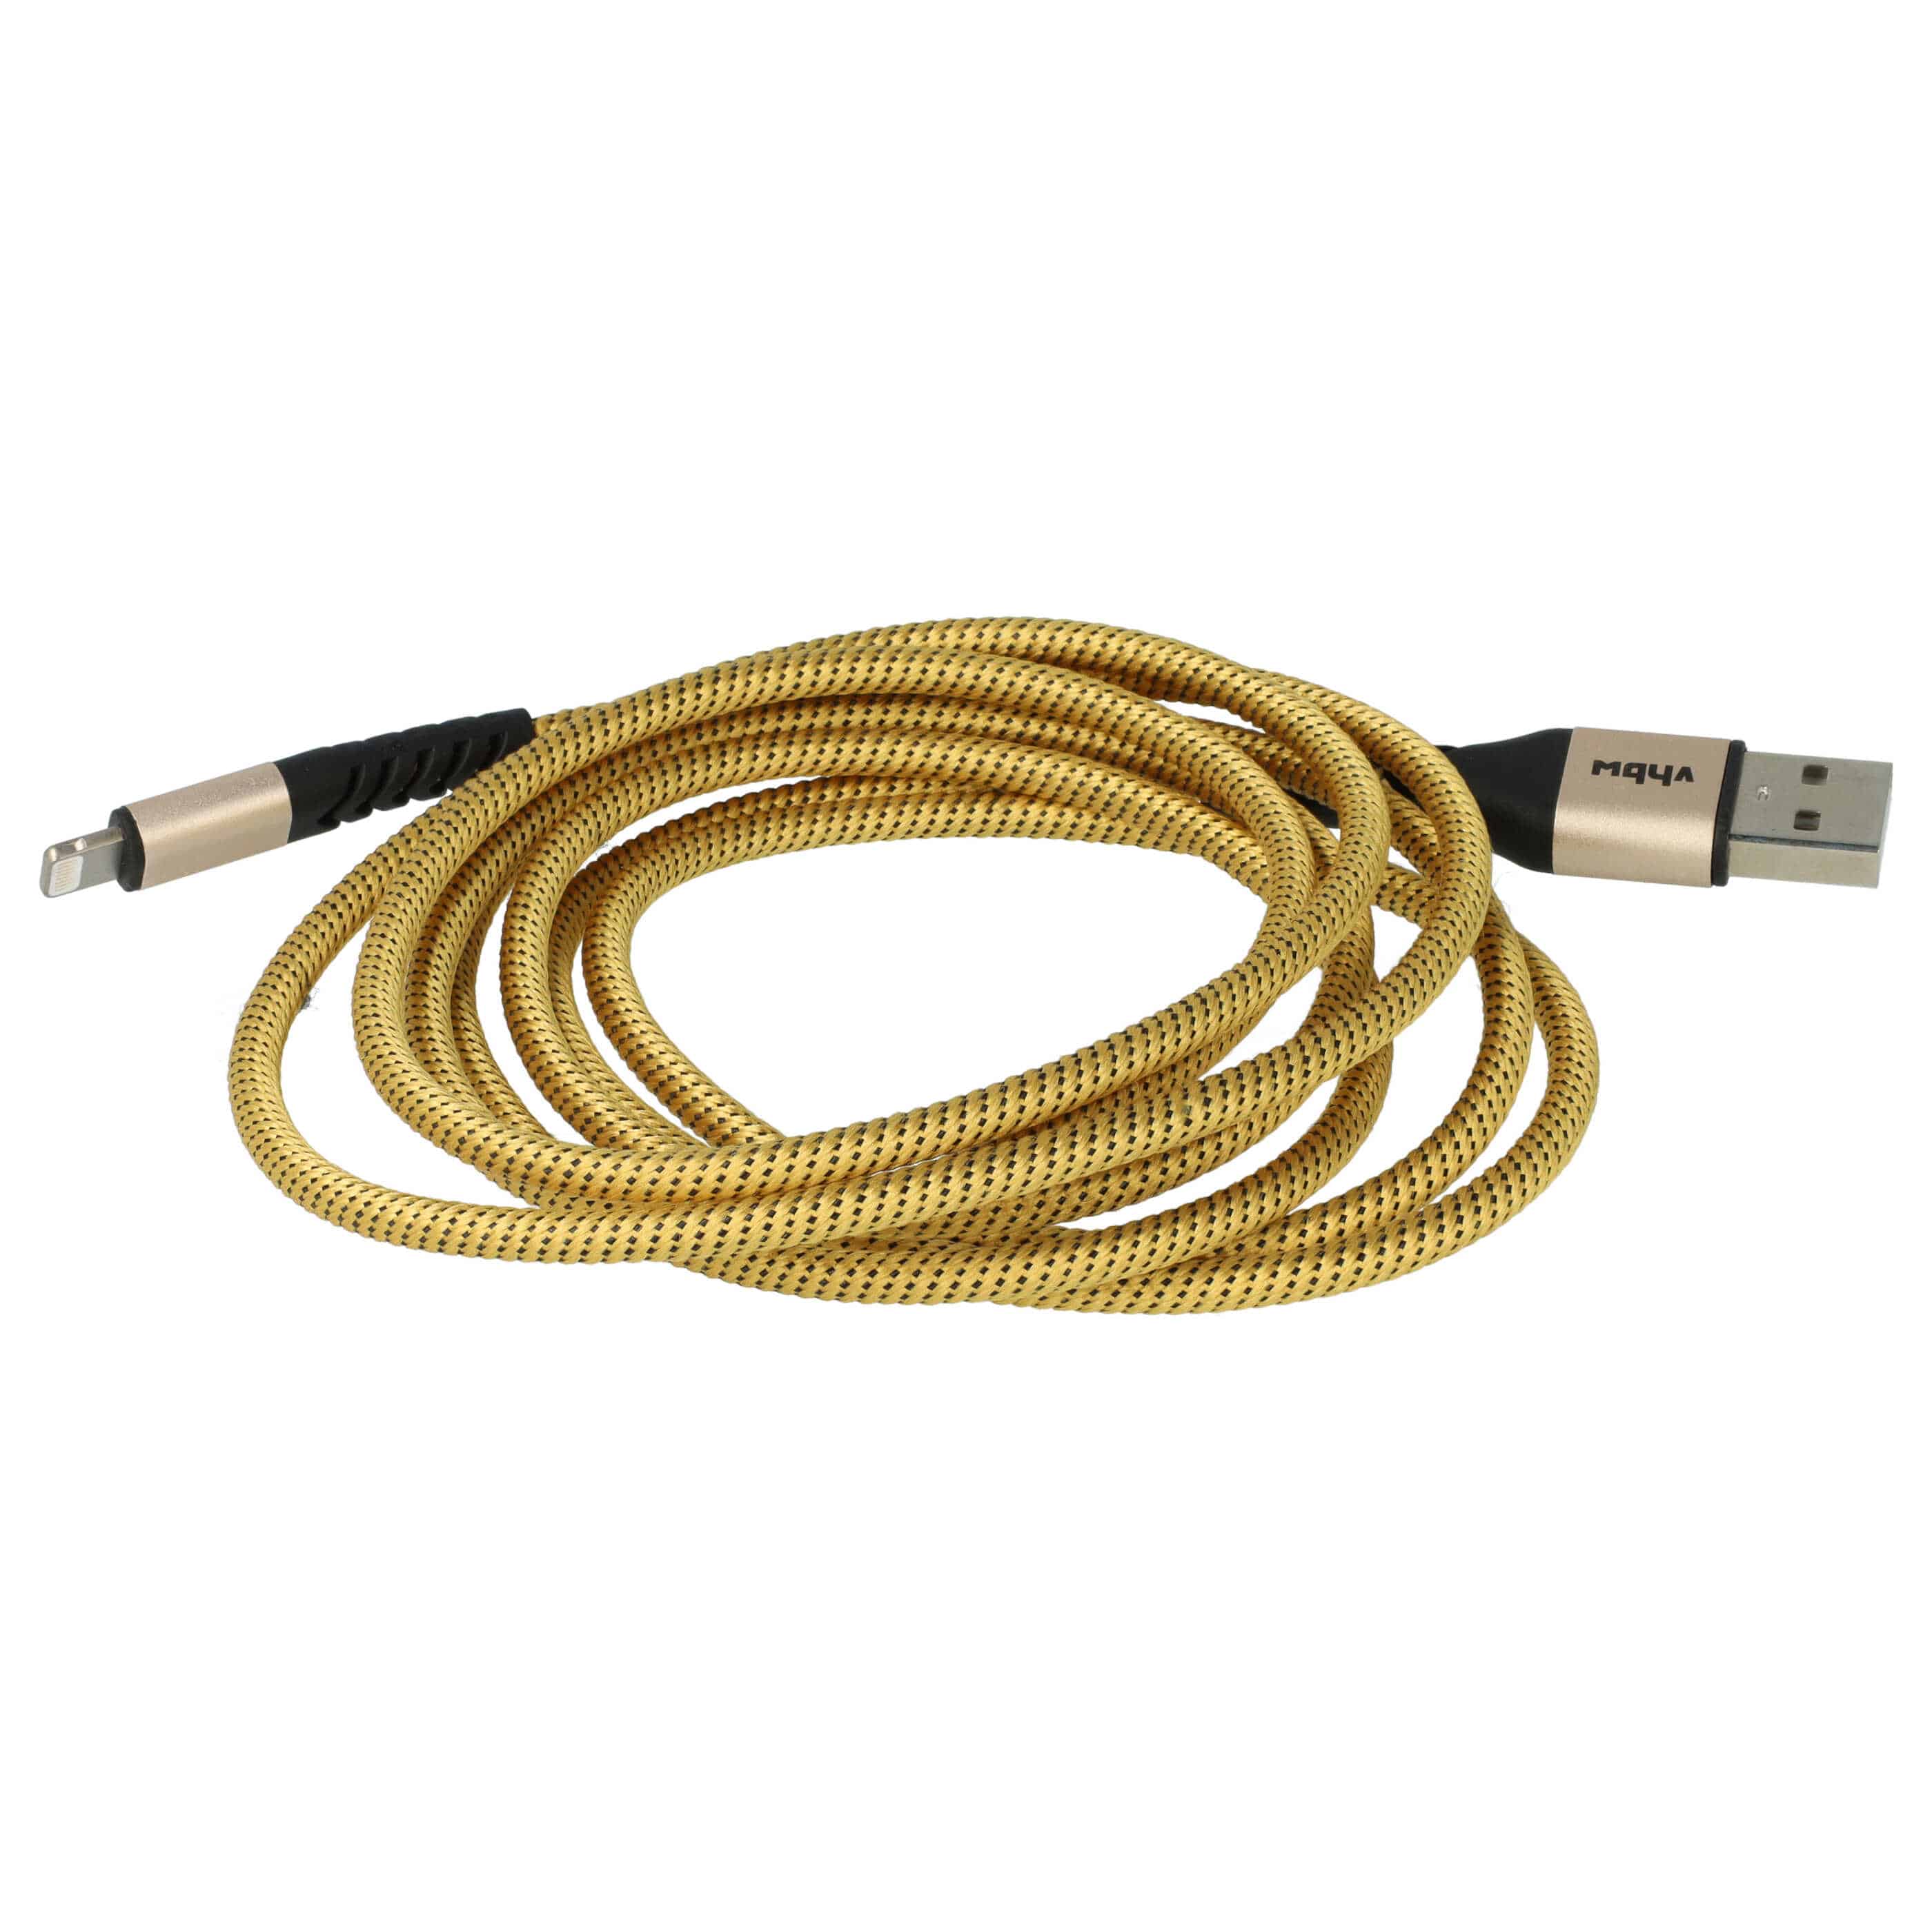 2x Câbles Lightning vers USB A pour iOS Apple AirPods - noir / jaune, 180cm